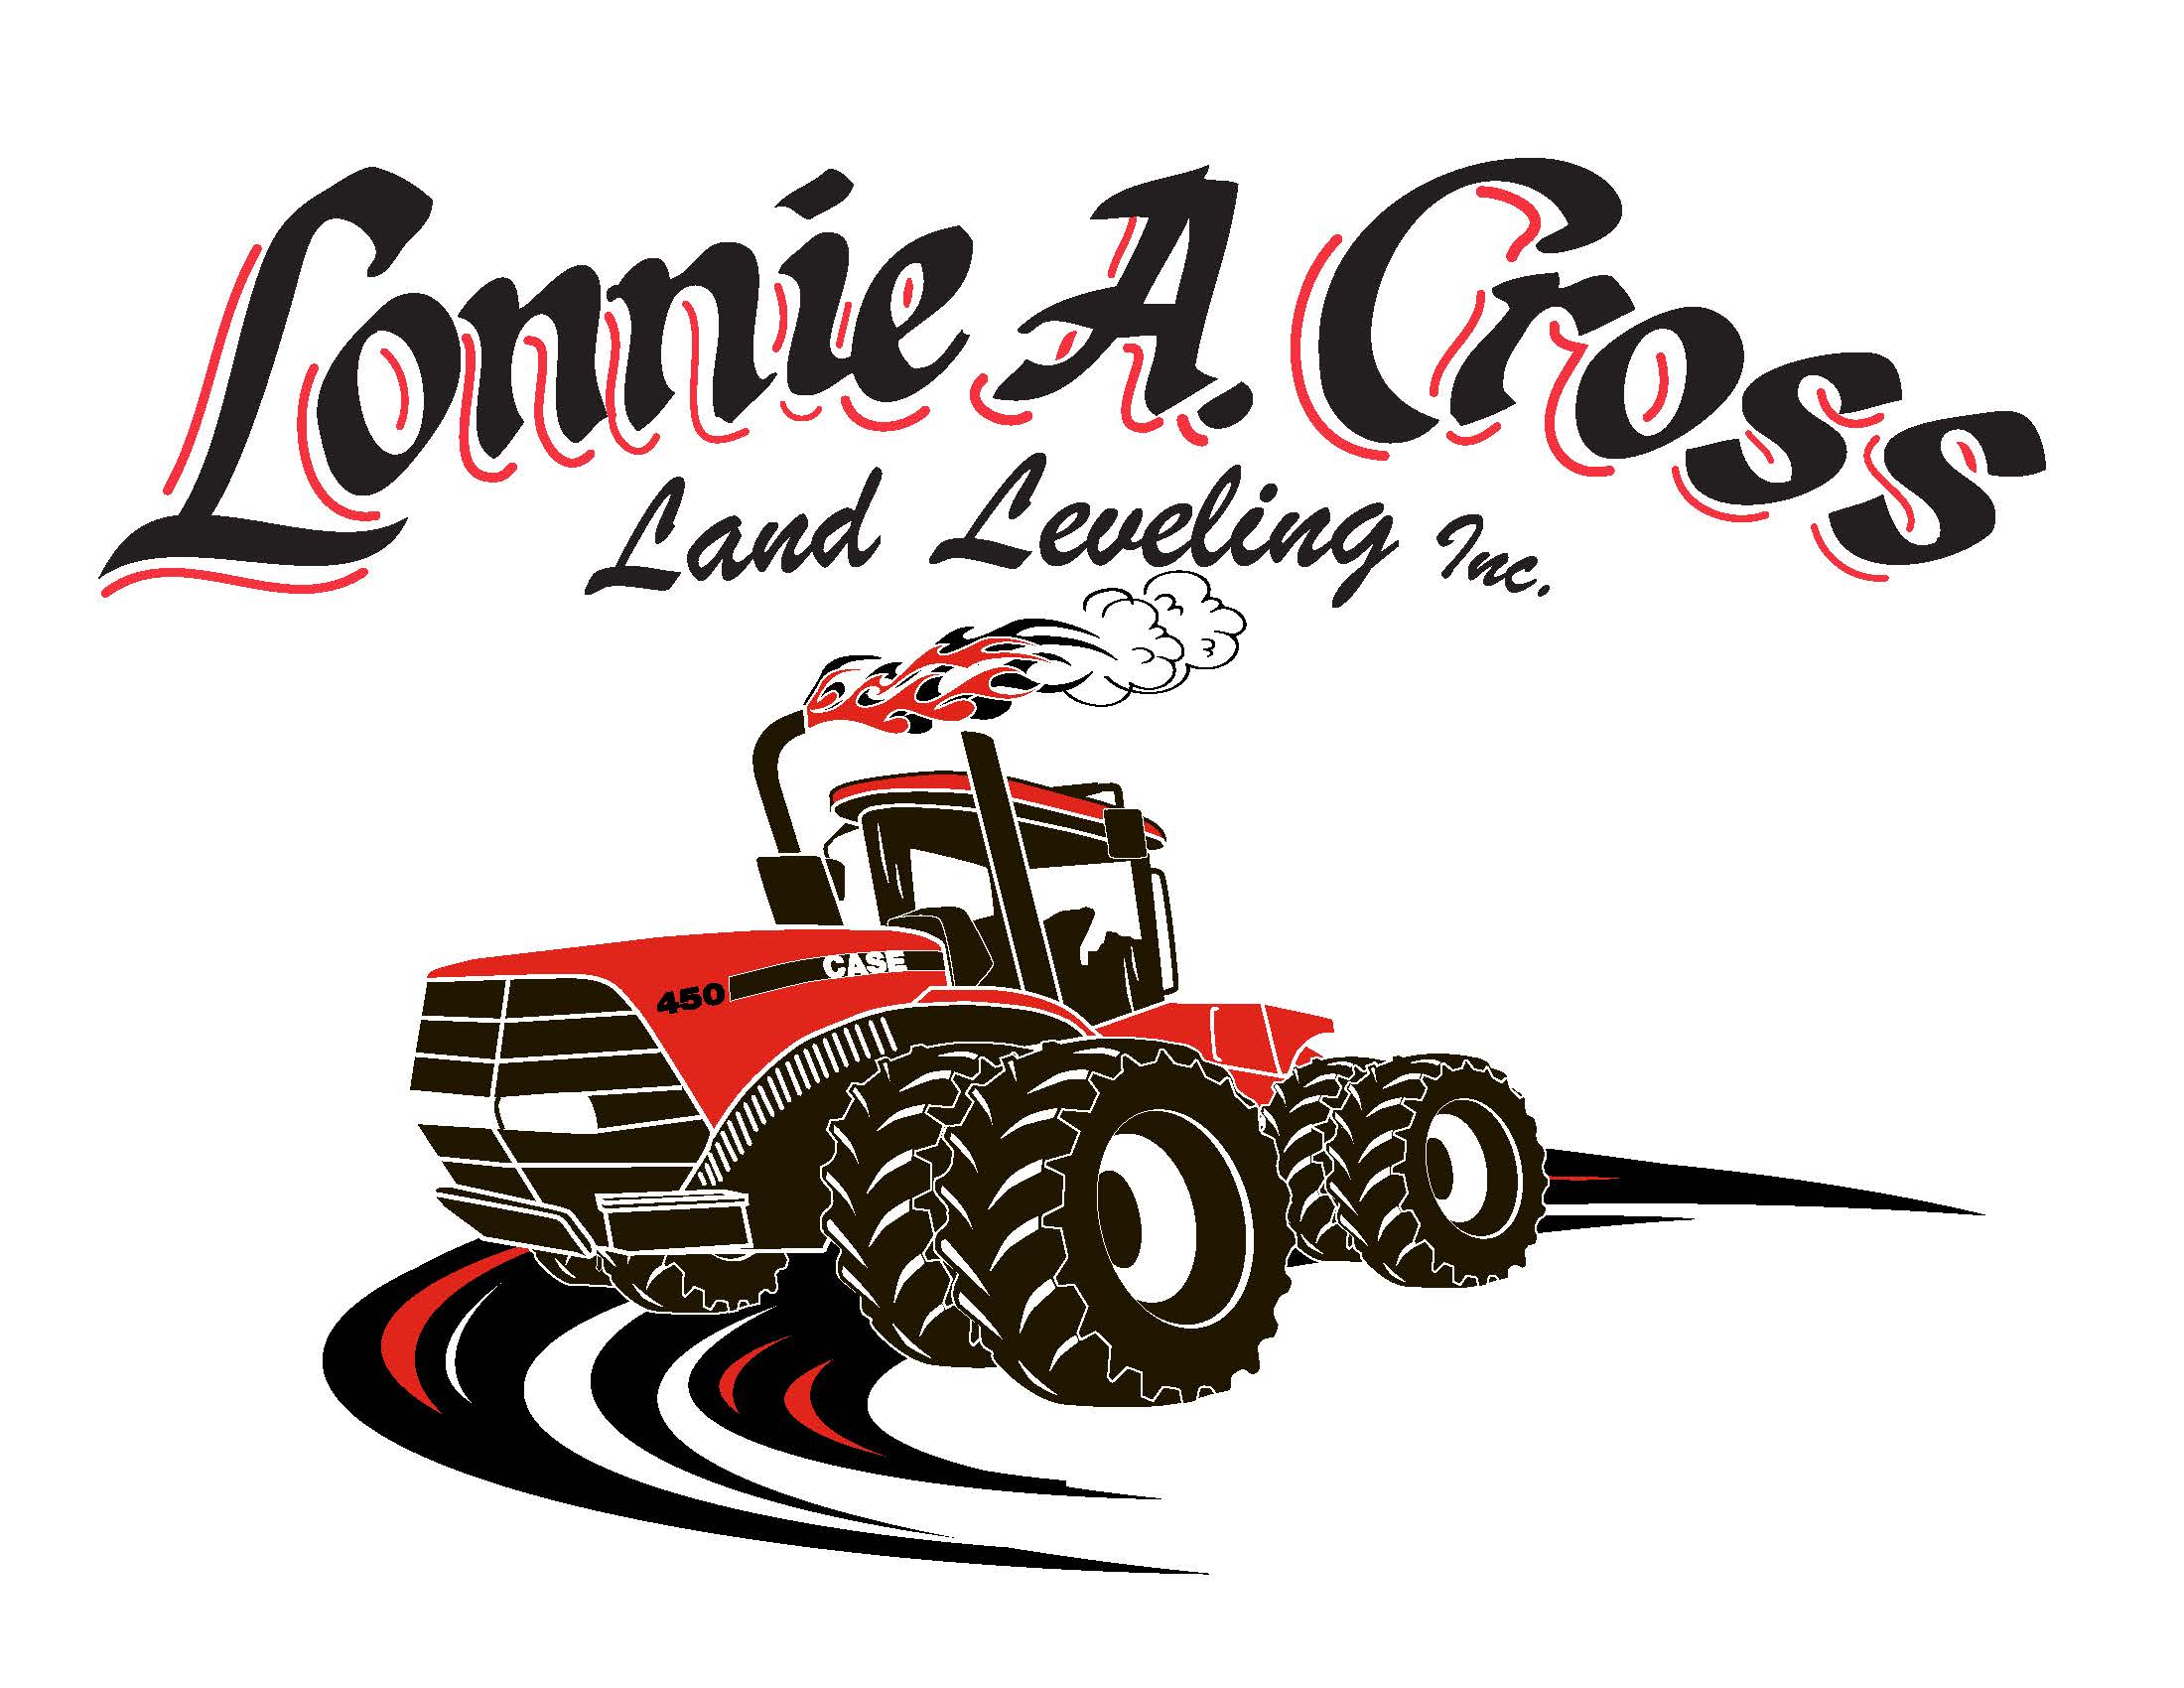 Lonnie A. Cross Land Leveling, Inc